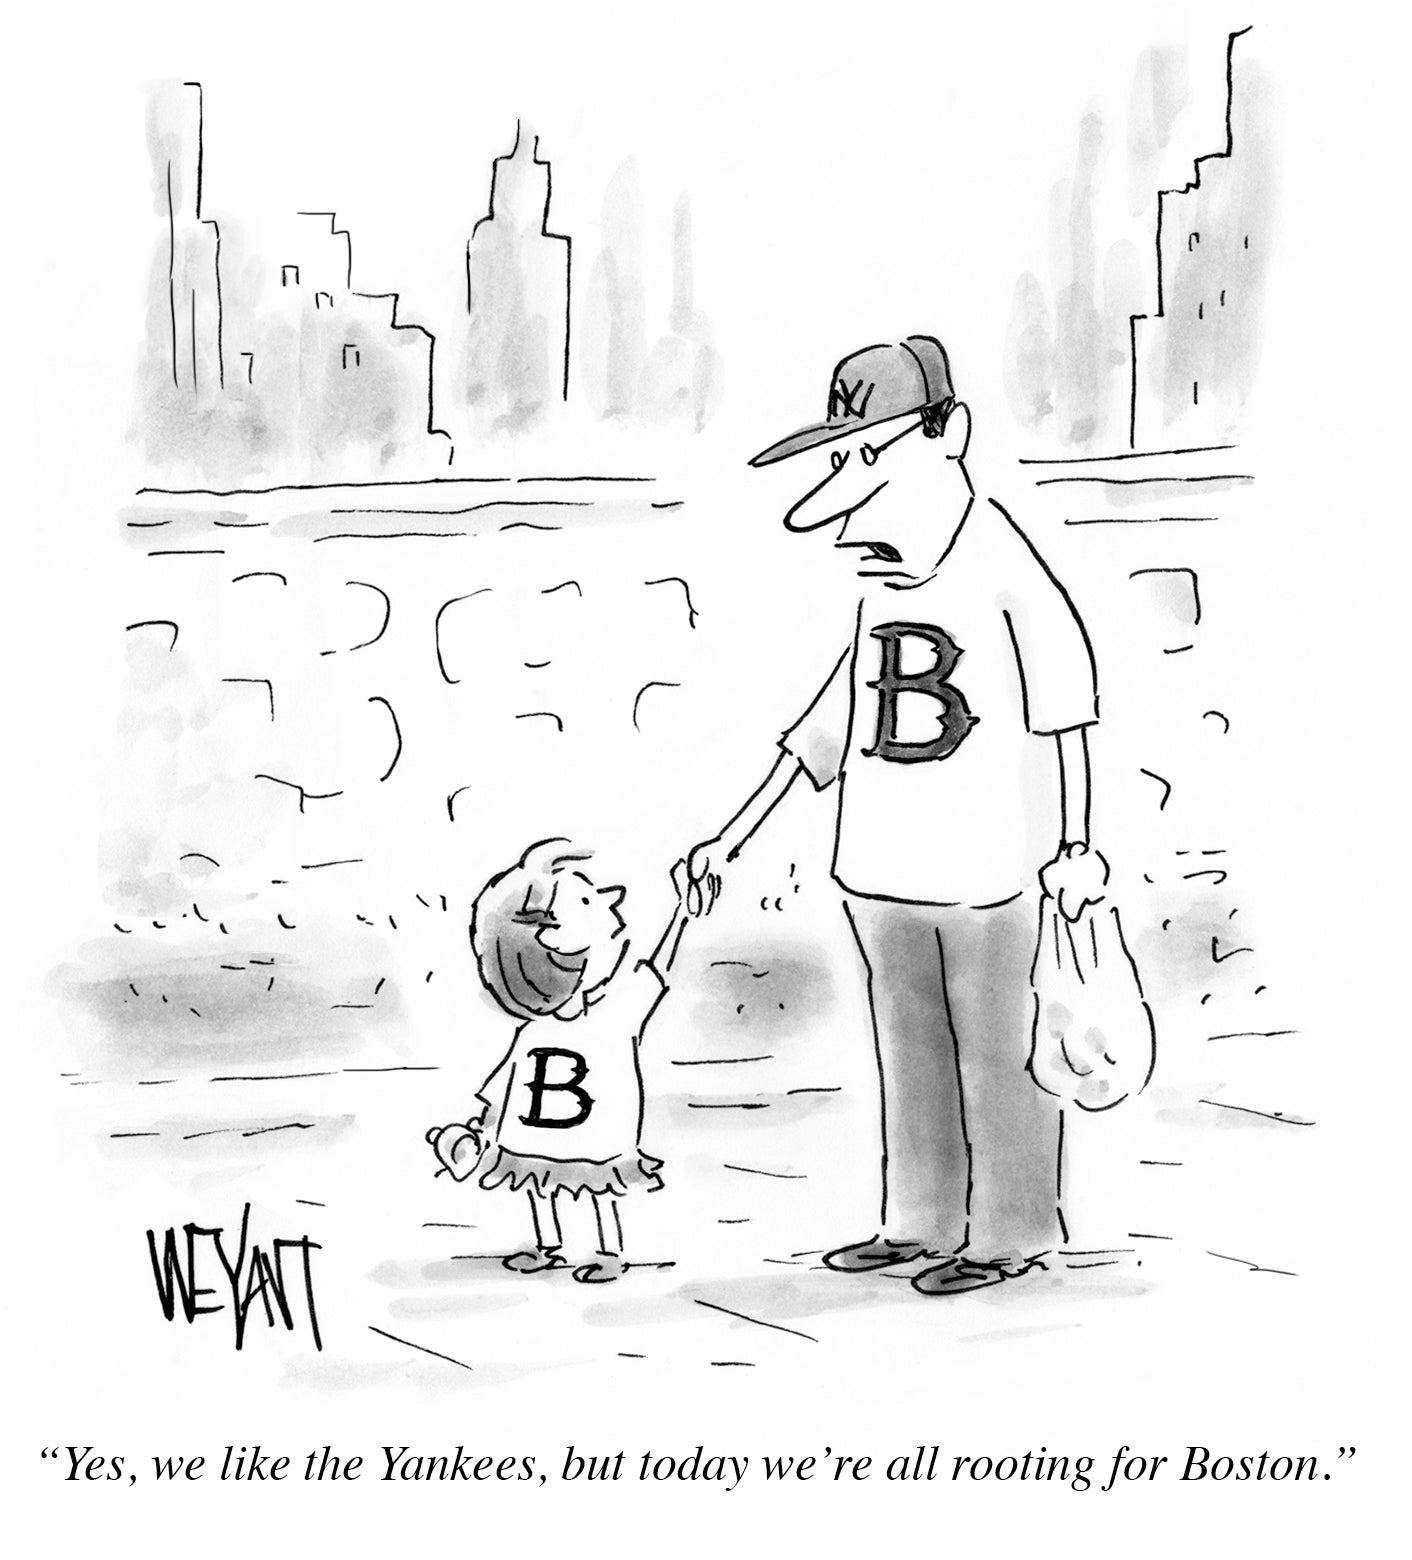 New Yorker cartoonist Christopher Weyant recalls famous Boston cartoon